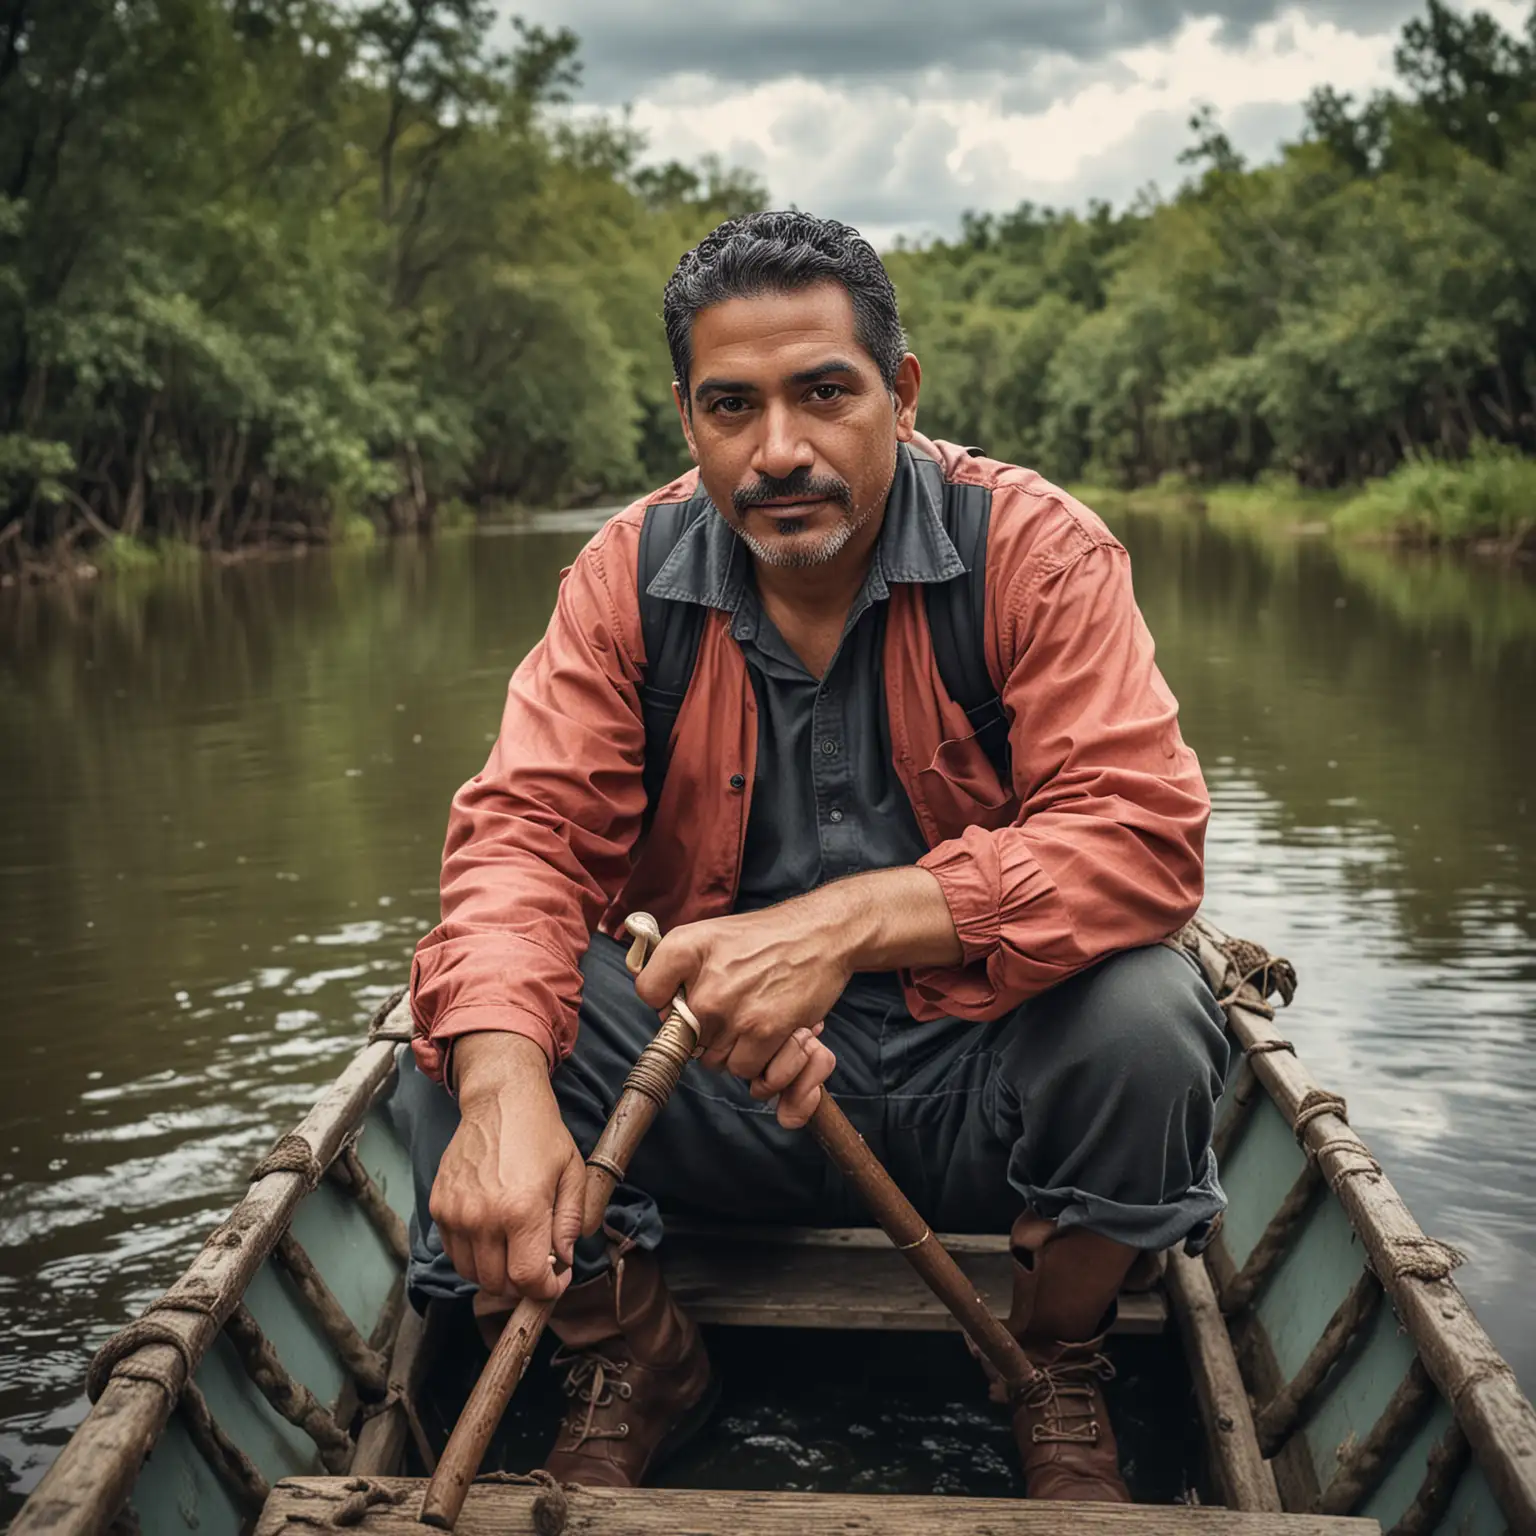 Hispanic Man Fishing in Jon Boat on Cloudy River